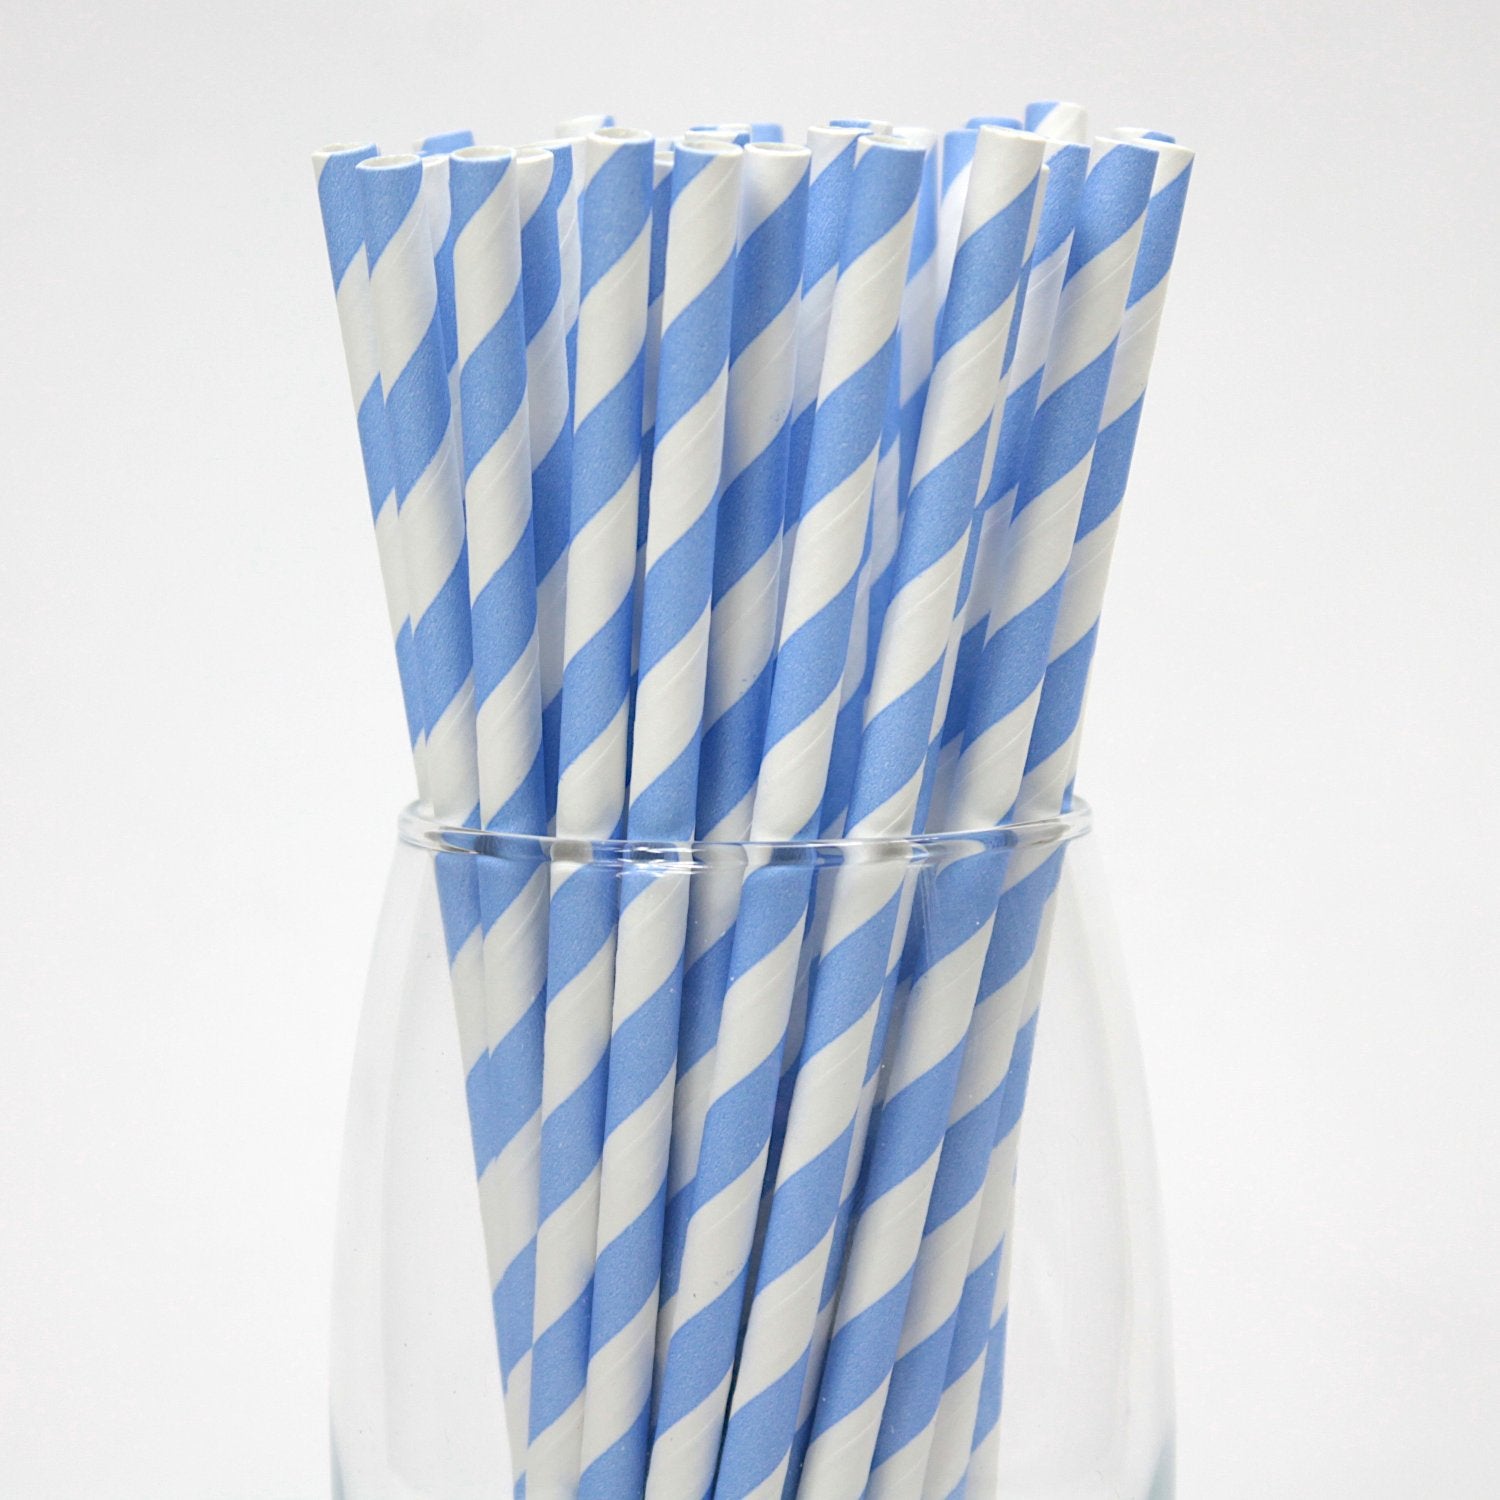 Blue & White Striped Paper Straws (6mm x 200mm) - Quality Drinking Straws - Intrinsic Paper Straws